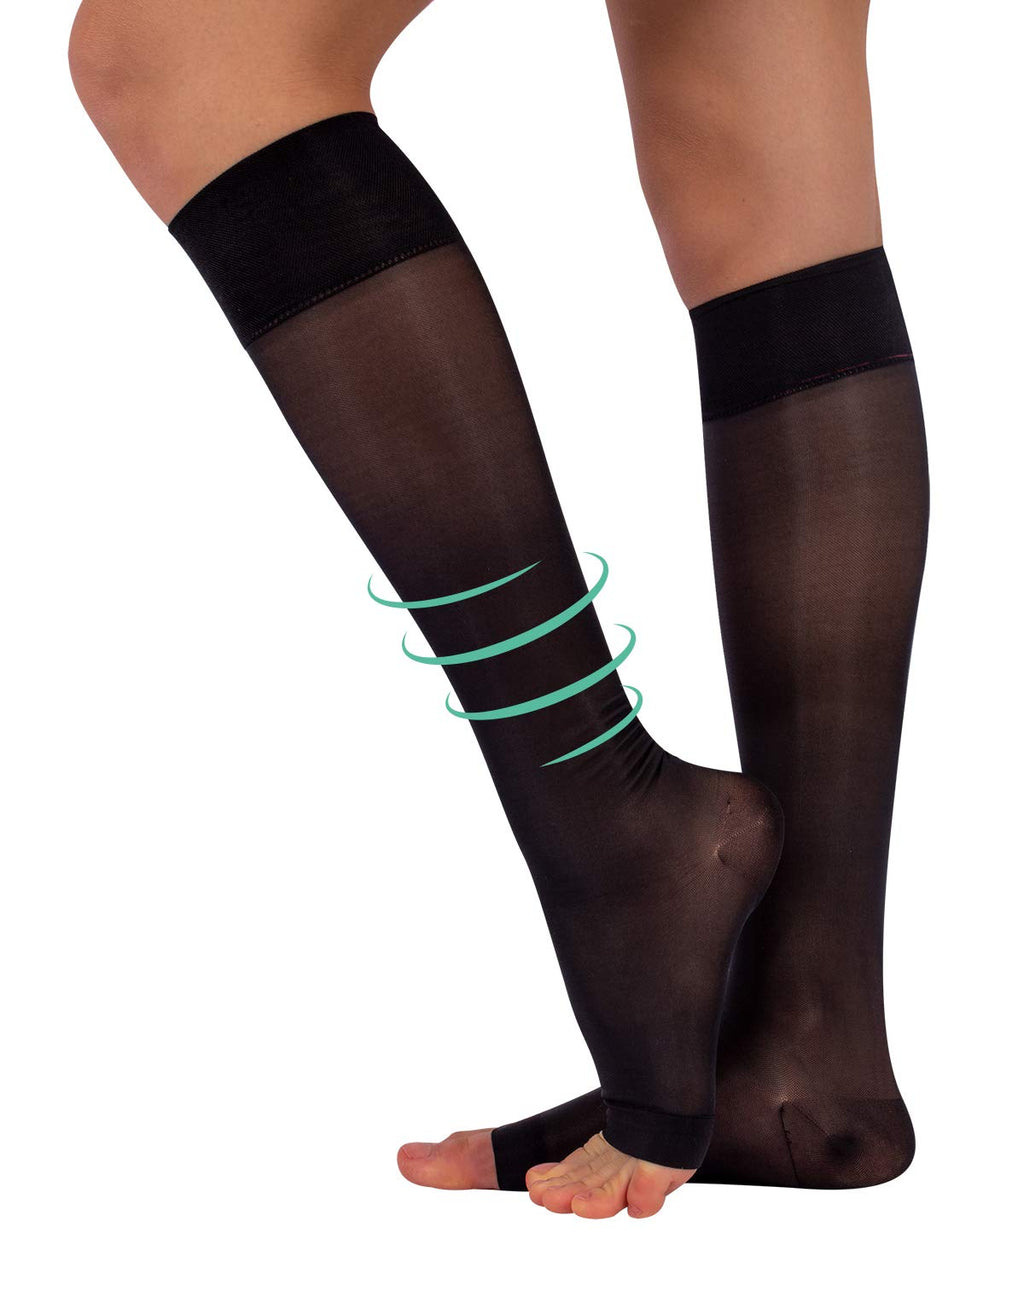 Open Toe Graduate Compression Knee-High Socks 18-22 mm/Hg | Medical Toeless Socks | Black, Skin | S/M, L/XL | 140 DEN | Made in Italy S-M - BeesActive Australia